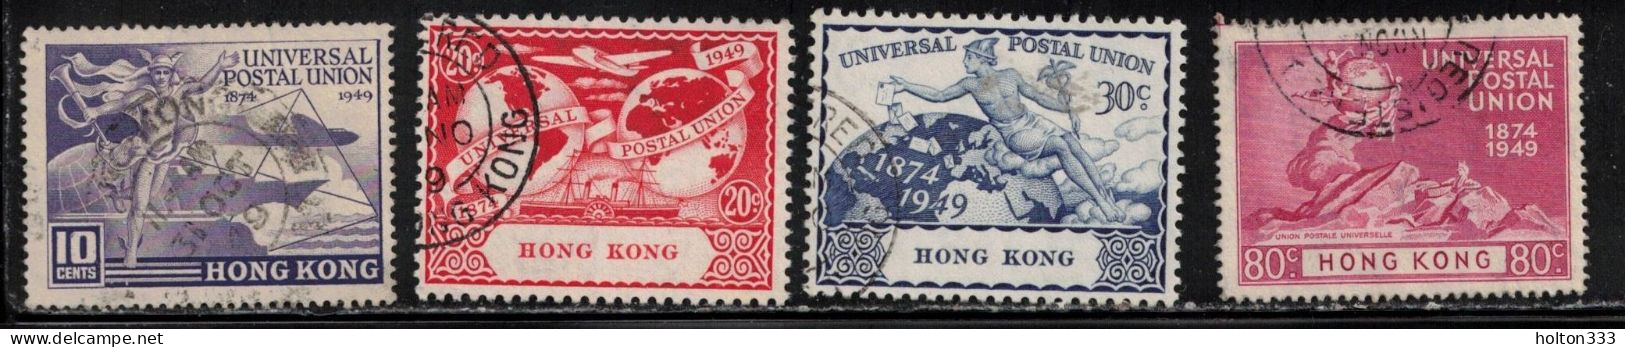 HONG KONG Scott # 180-3 Used - 1949 UPU Issue - Usati